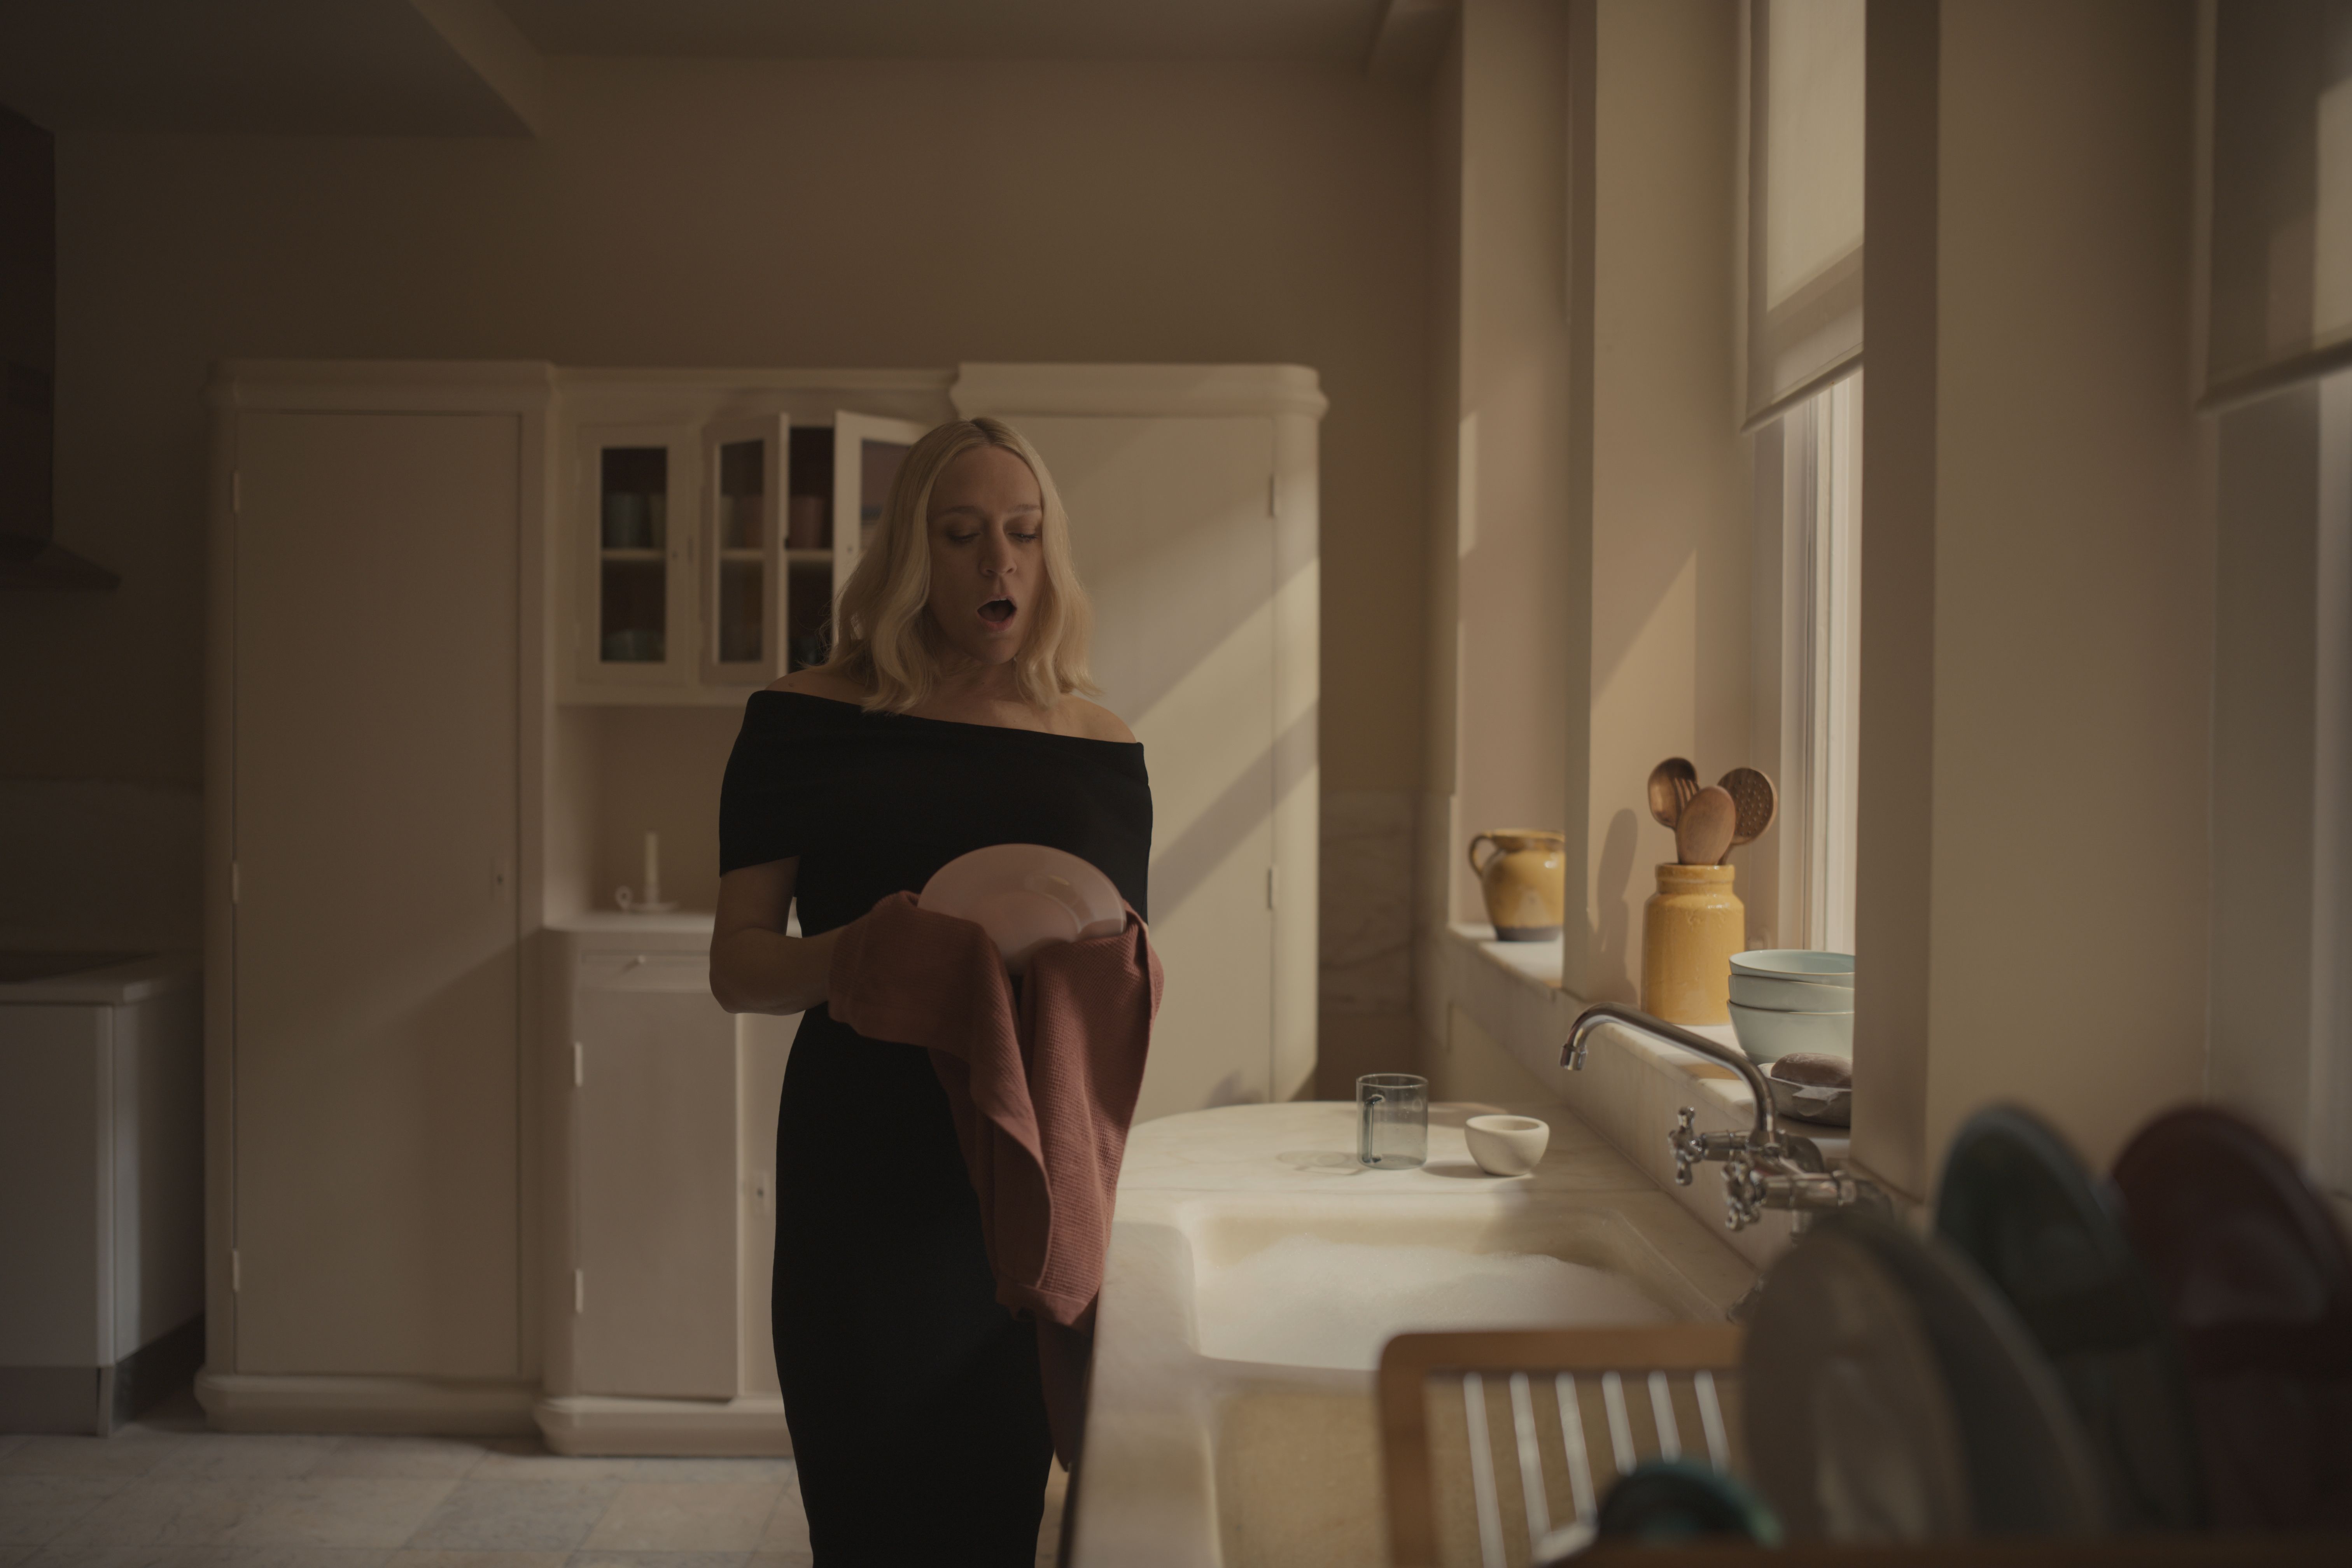 uitdrukken munt Bruin Zara Home's Launches "The Last Line" Film Featuring Chloë Sevigny in the  Casa de Serralves